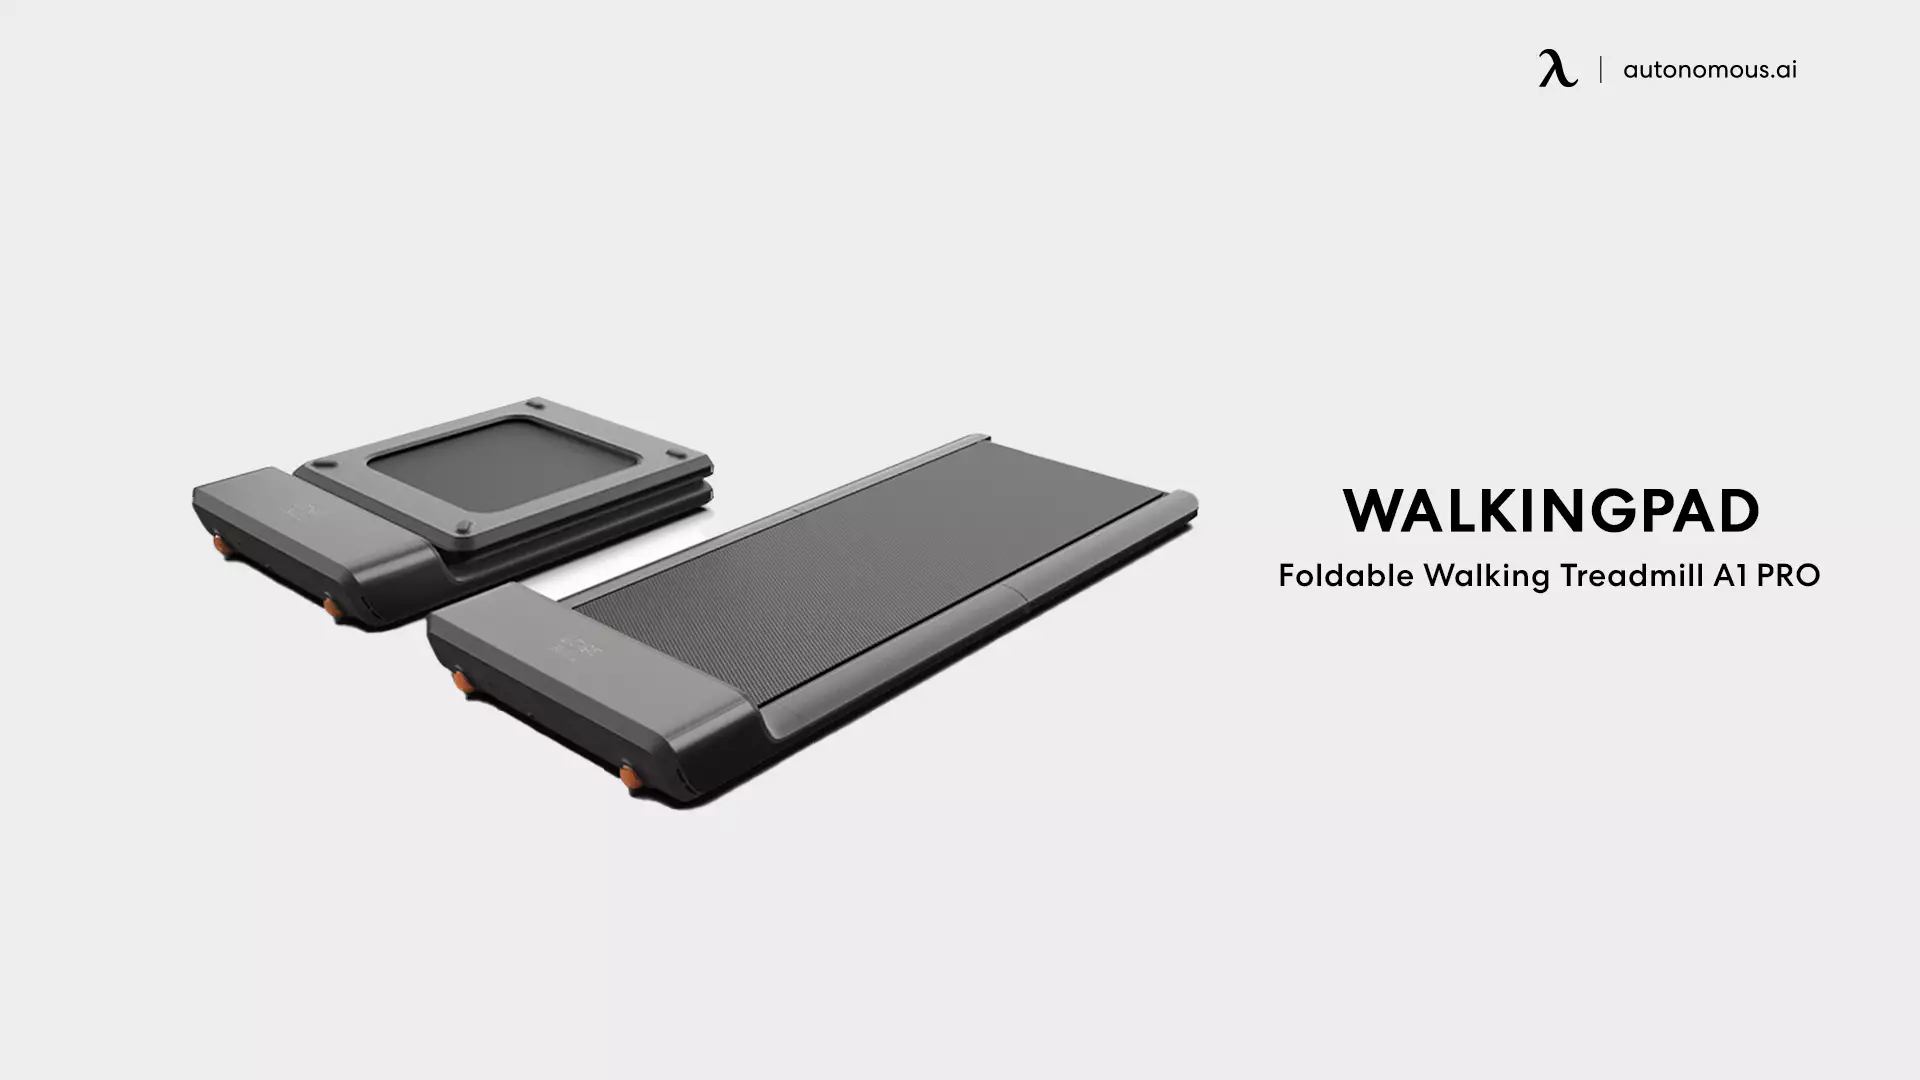 WalkingPad Foldable Walking Treadmill A1 Pro